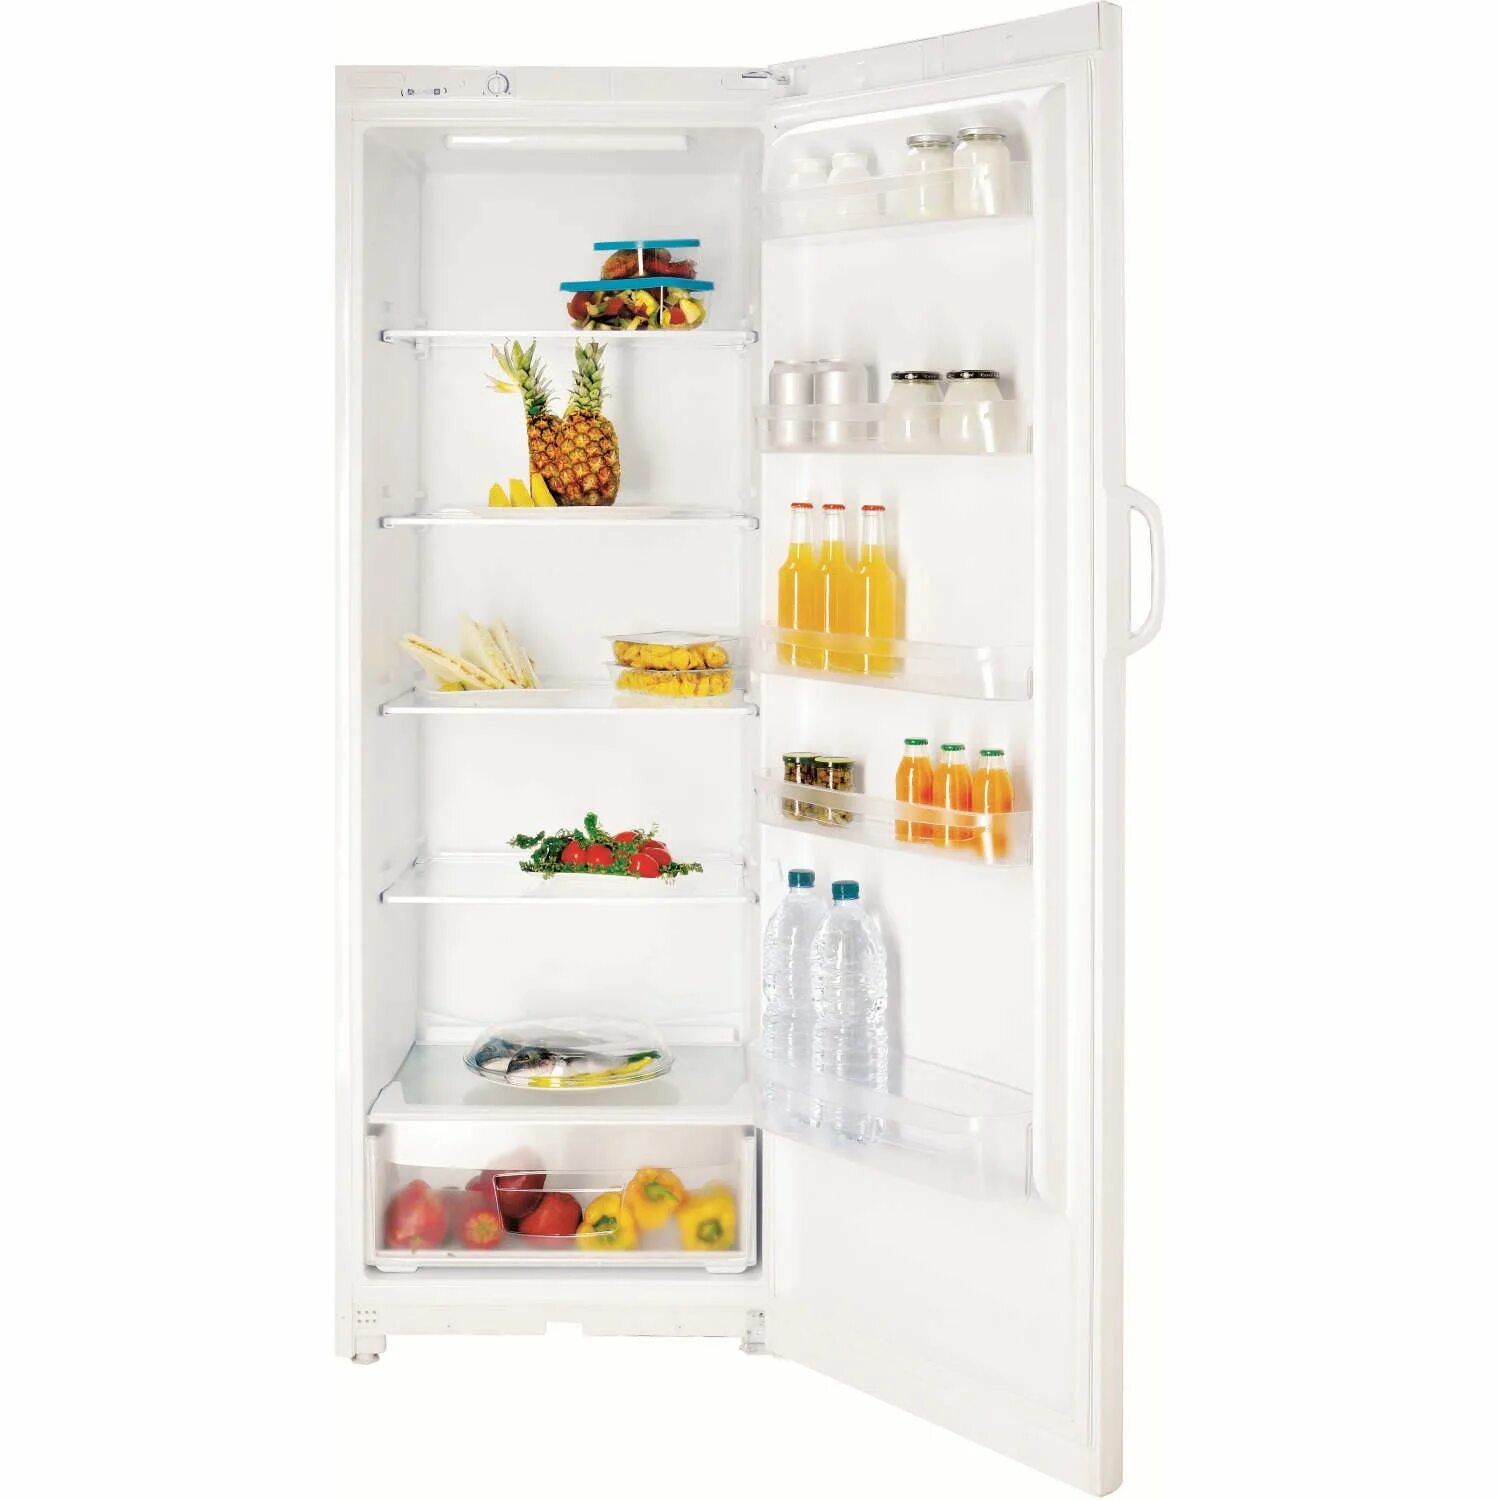 Полки для холодильника индезит. Холодильник Siemens ks36fpi30. Холодильник Индезит однокамерный. 103481041866 Индезит холодильник.